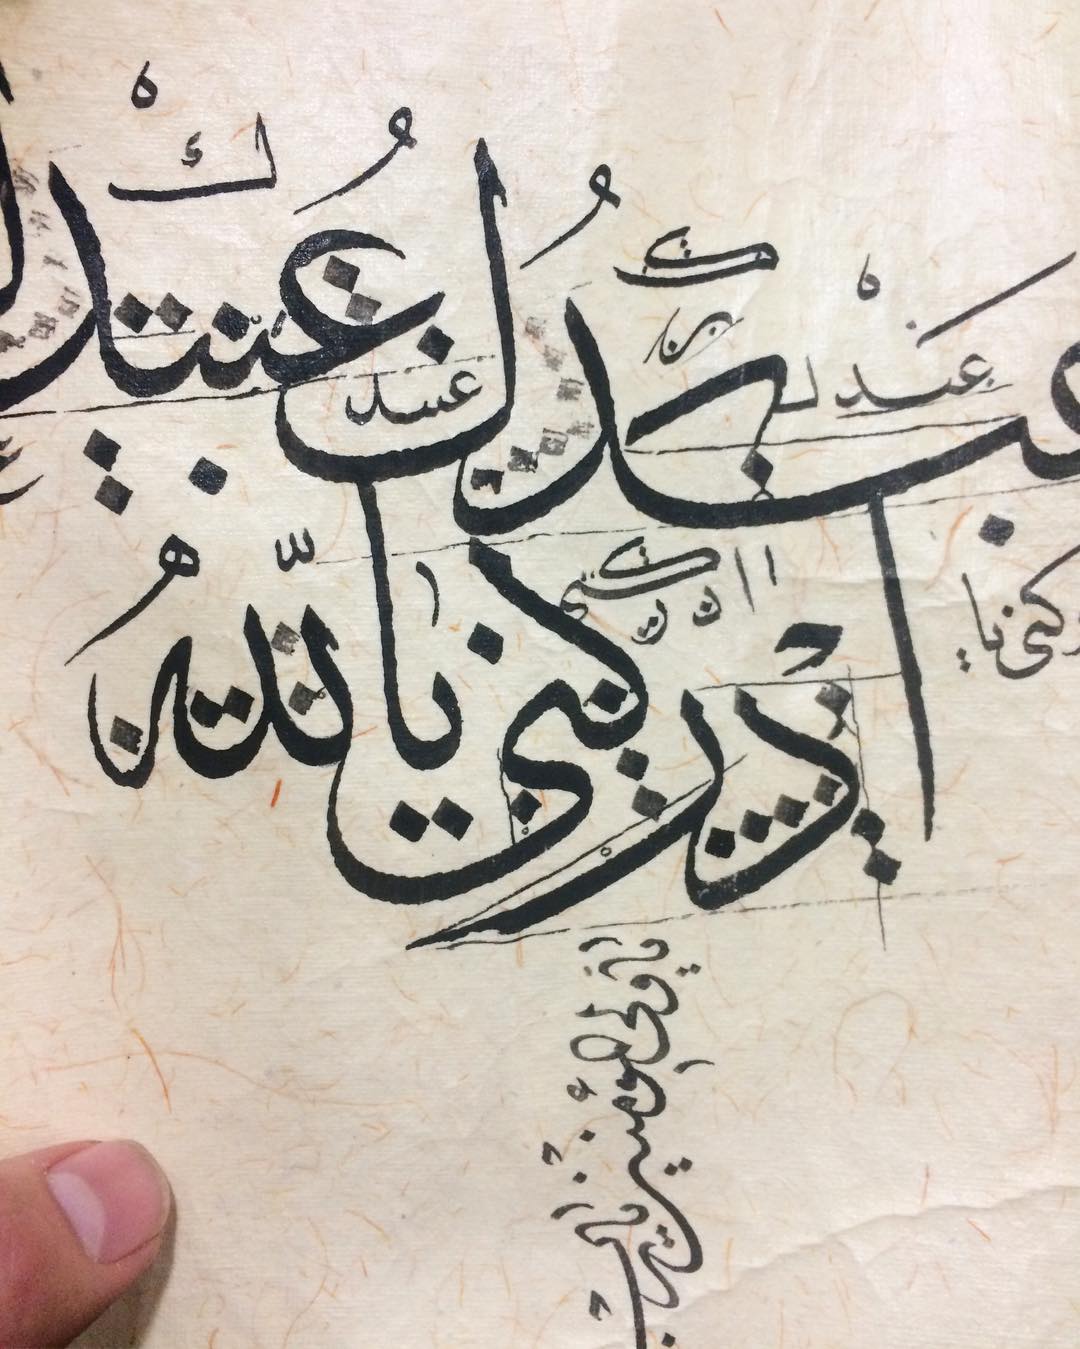 Karya Kaligrafi يارب..
.
.  صارت من نصيب الفنان الجميل
@ghareebart #calligraphy#islamicart#arabi…- jasssim Meraj